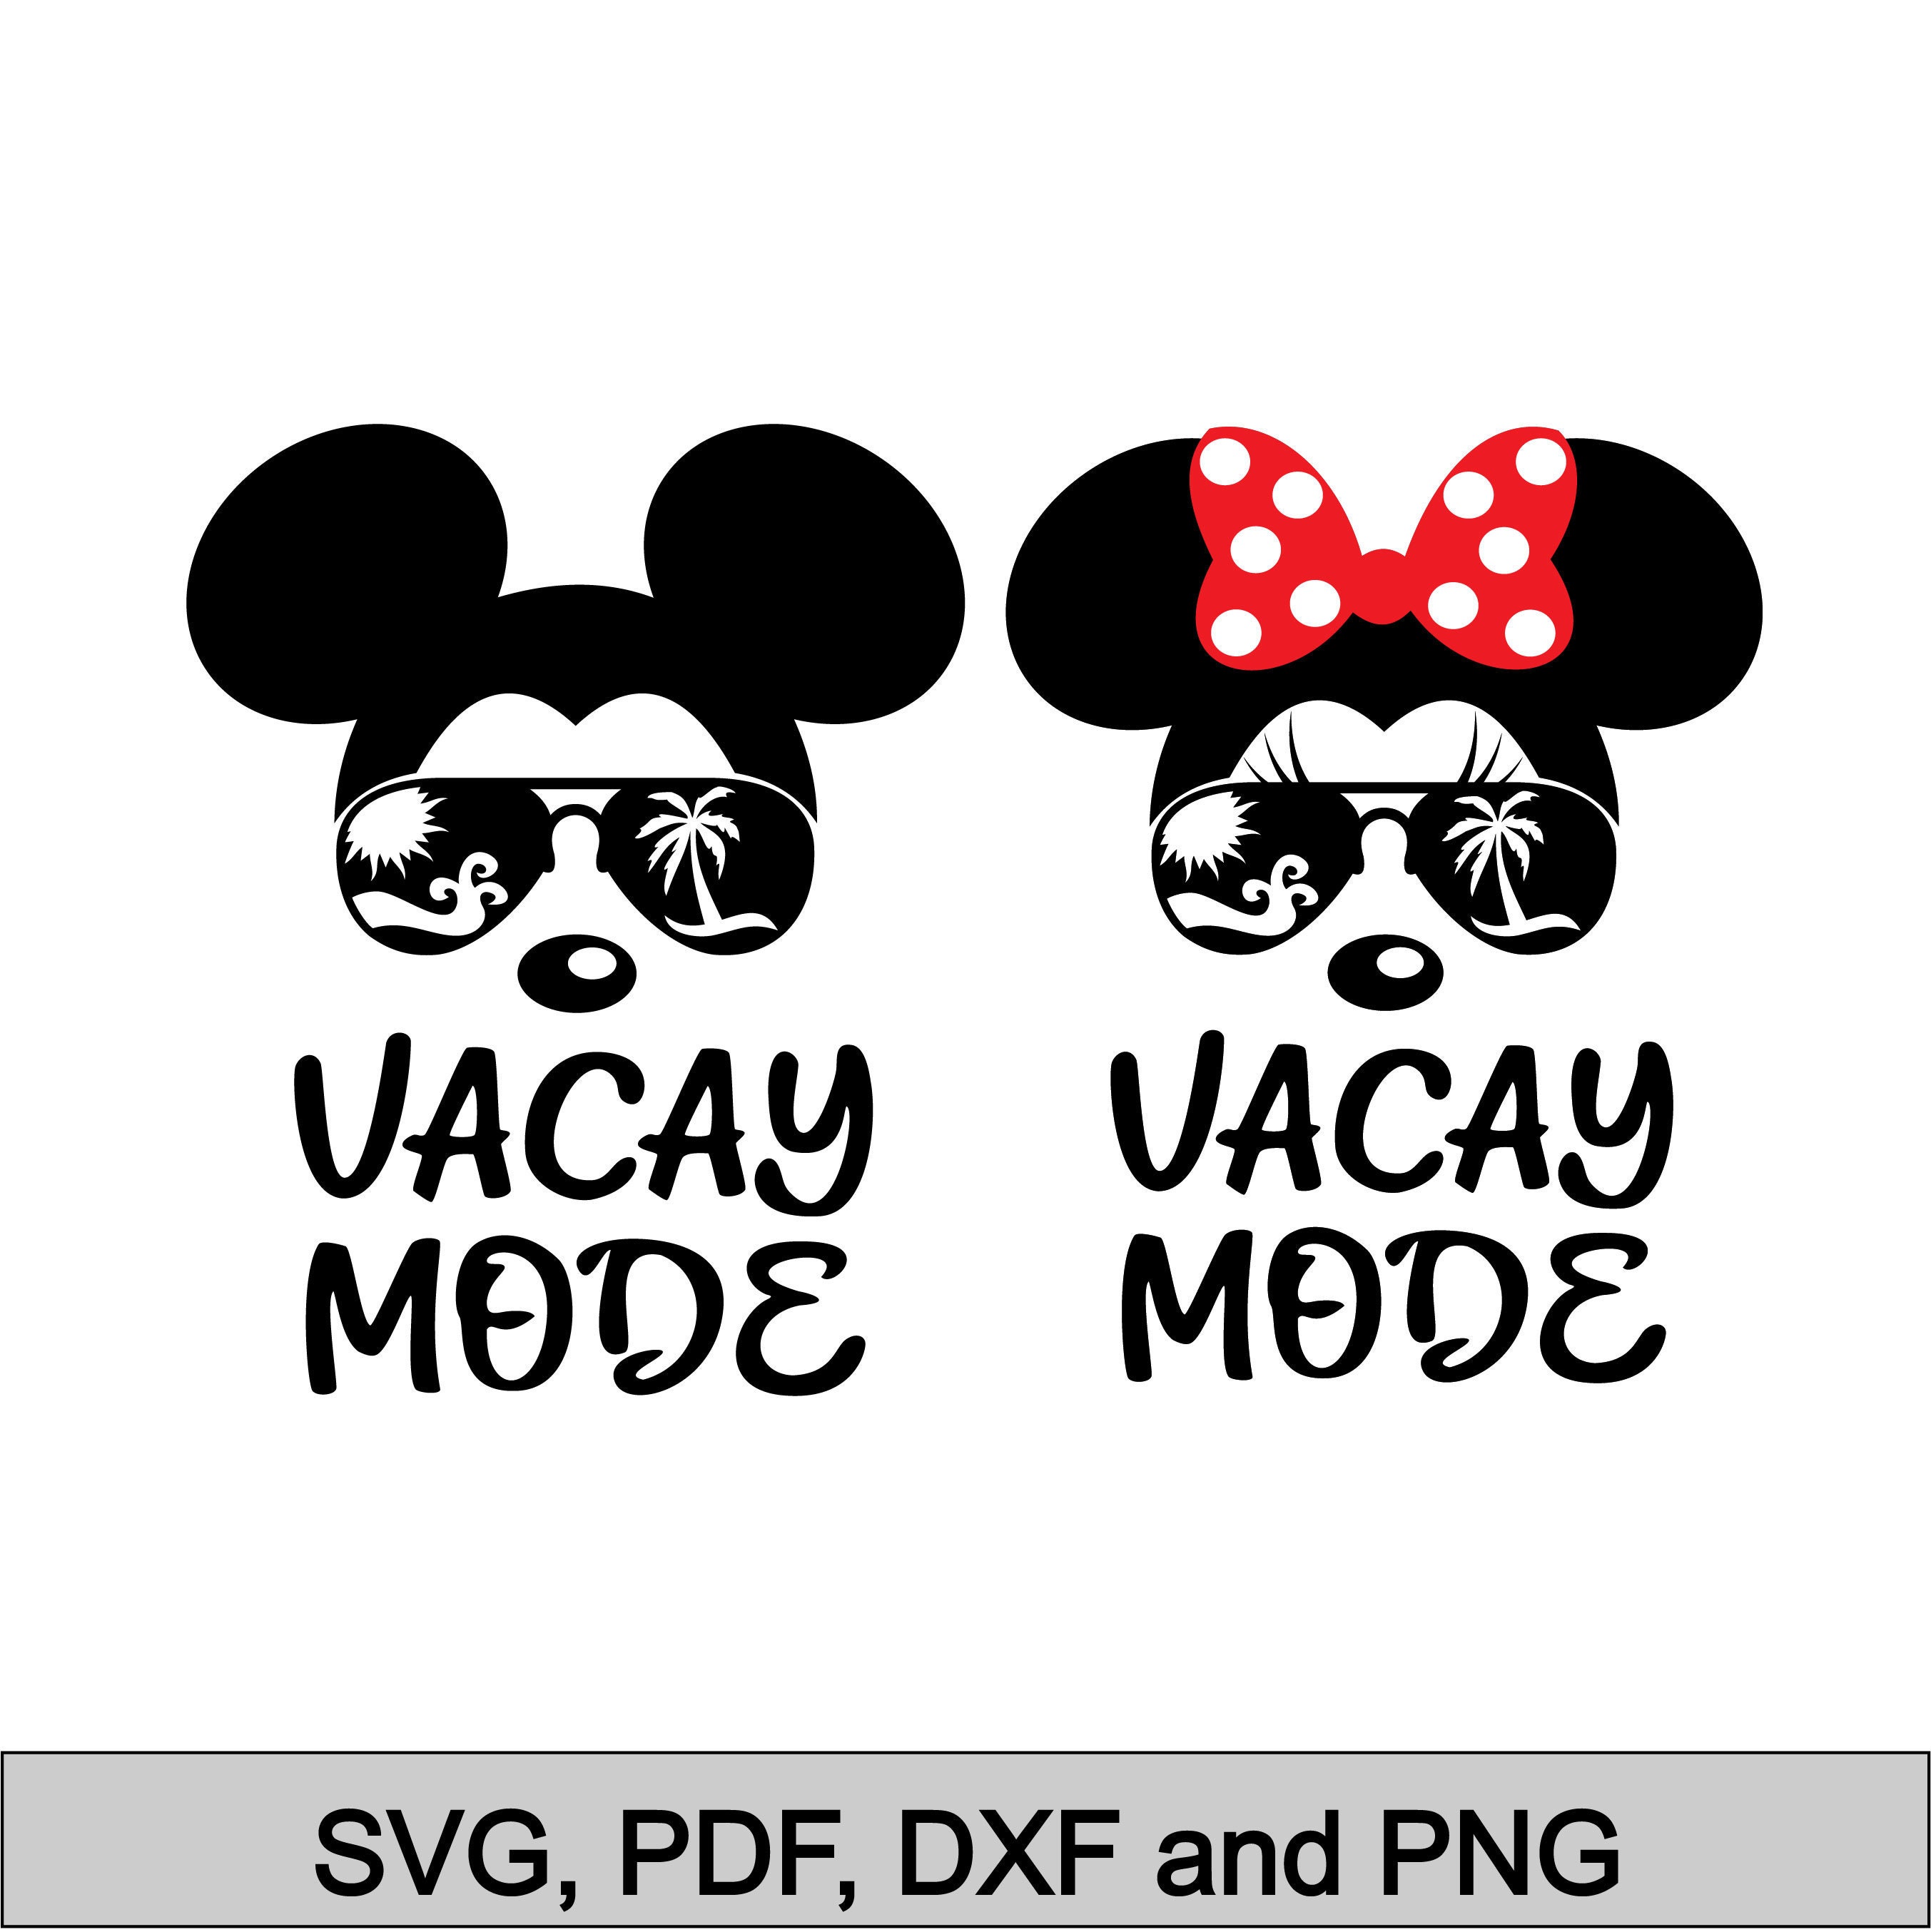 Download Vacation 2019 svg Vacay mode Svg DIY Family Vacation ...